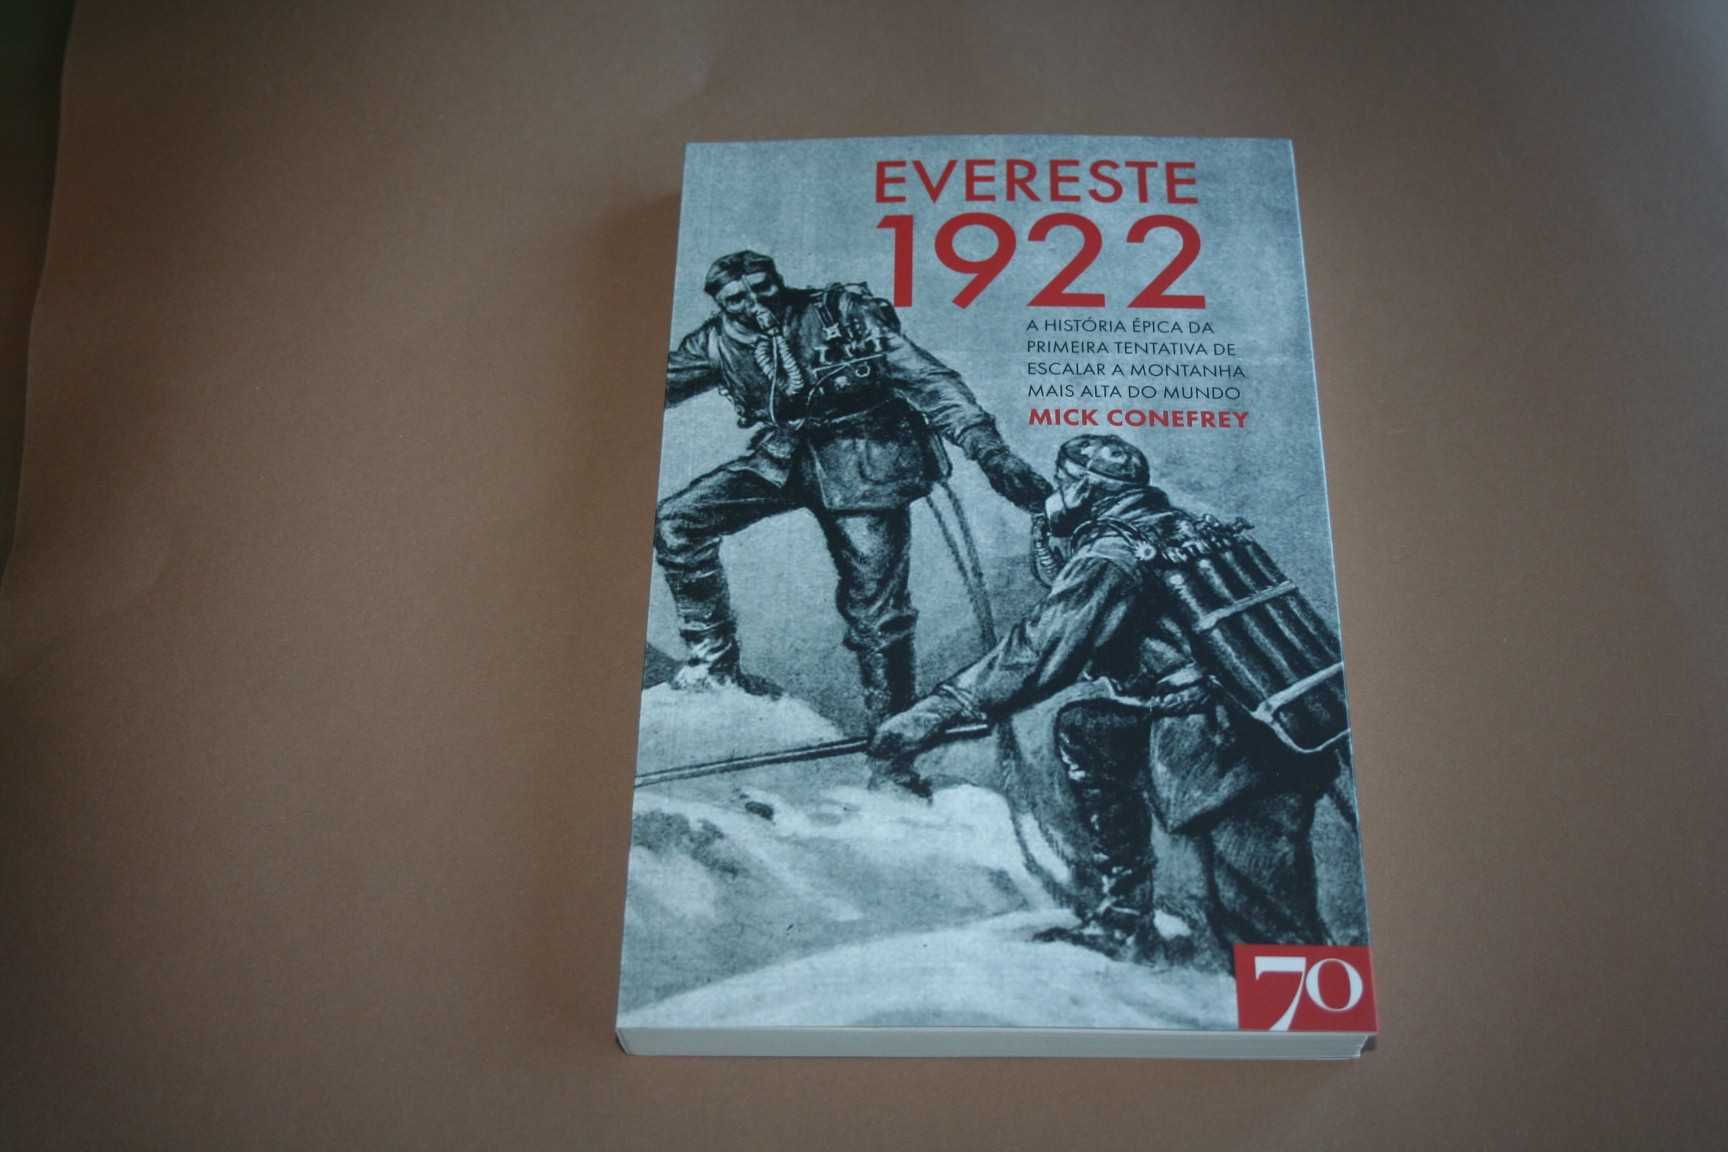 [] Evereste 1922, de Mick Conefrey